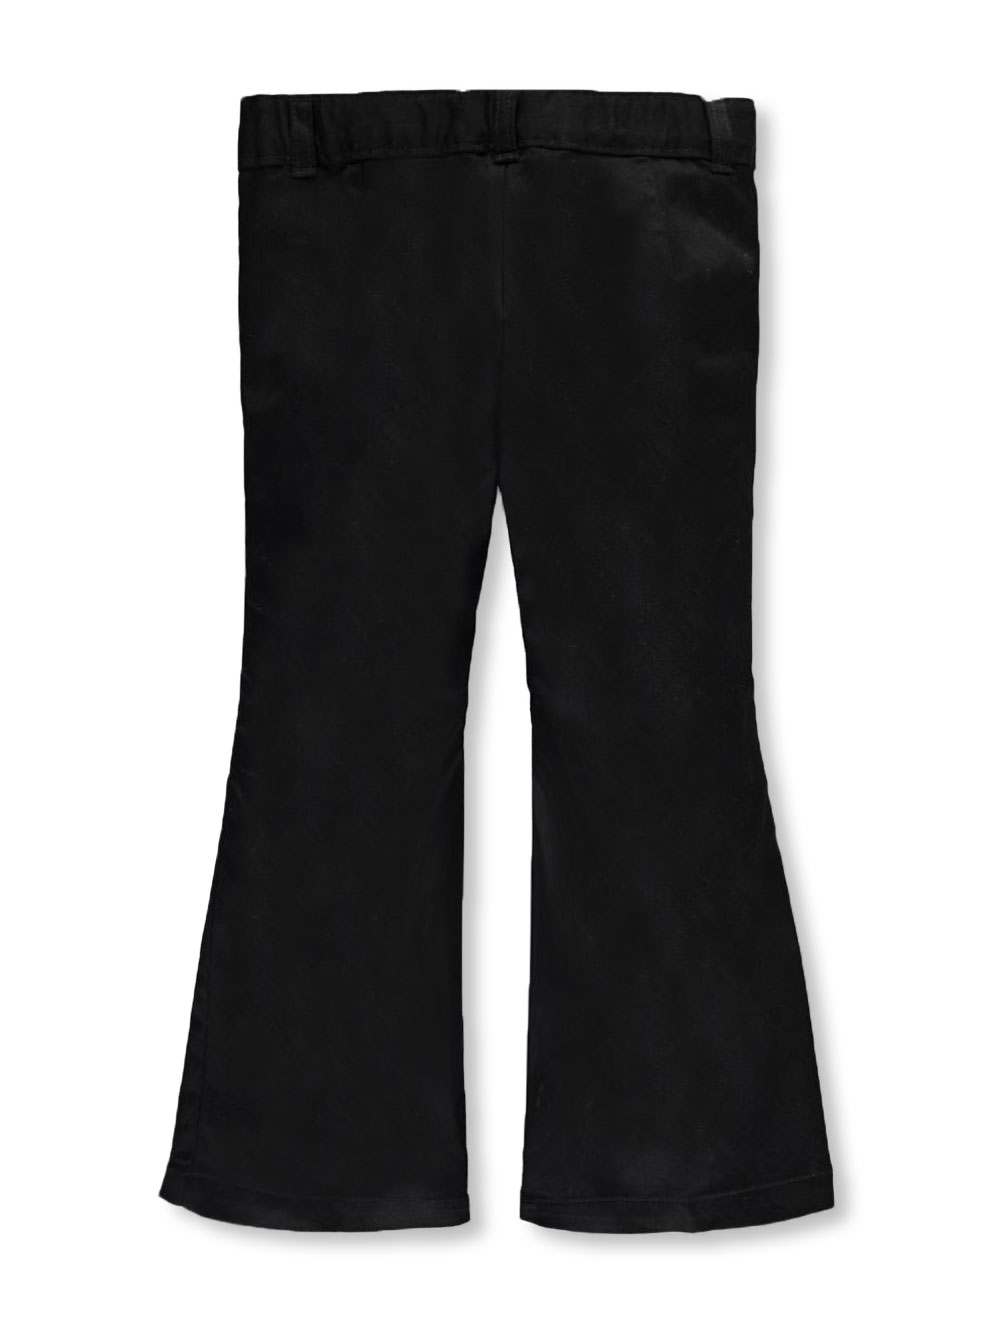 Cookie's Girls' Twill School Uniform Pants - black, 4 (Little Girls)